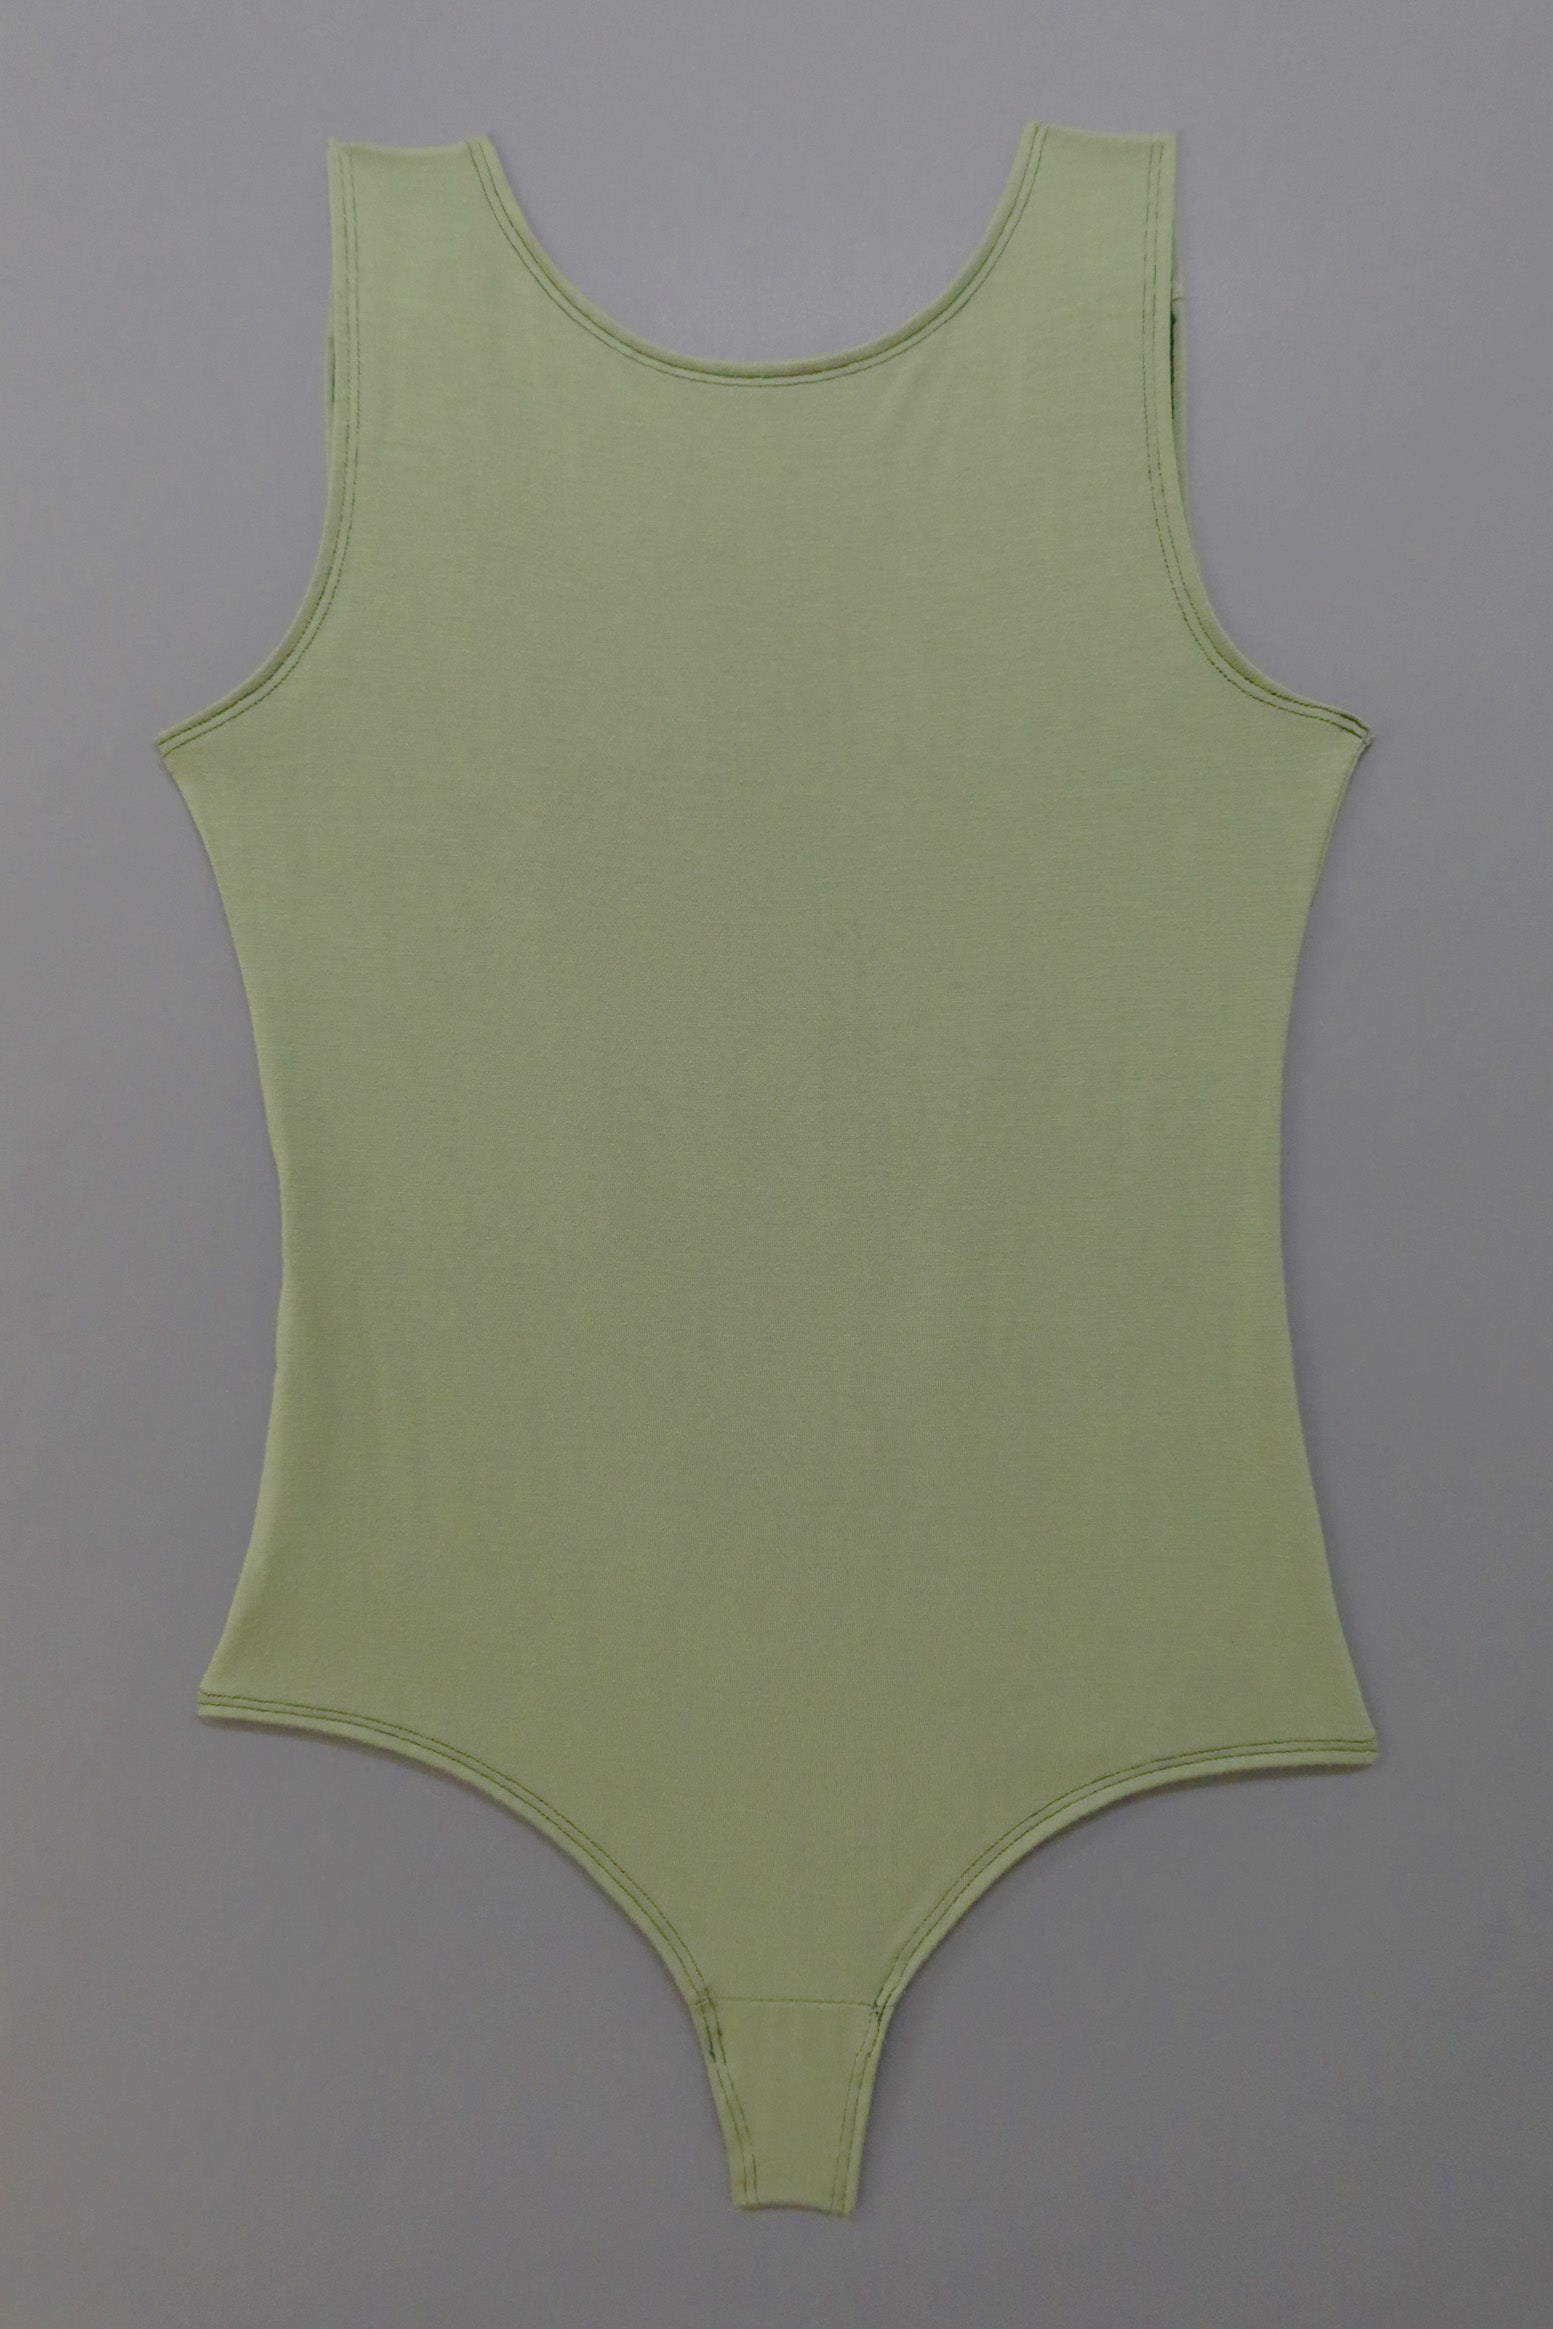 Backless Thong Bodysuit in Dusty Rose Sample on Garmentory